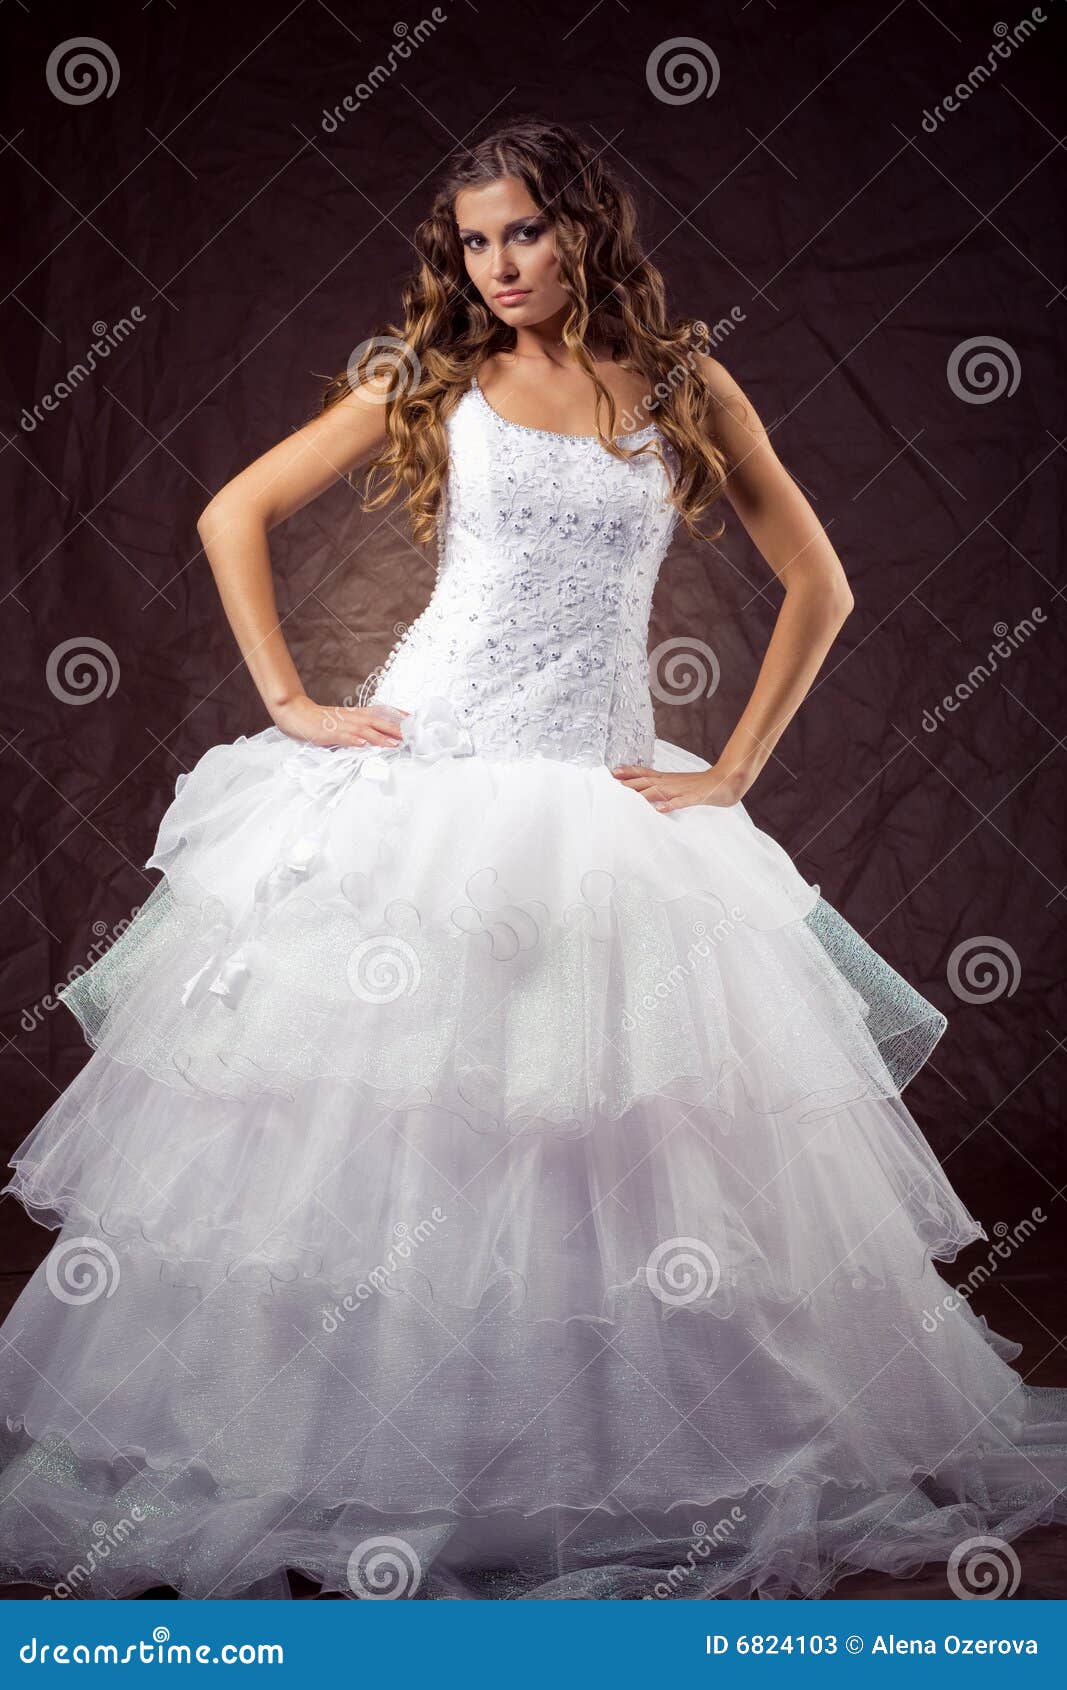 Fashion Model Wearing Wedding Dress Stock Photos - Image 